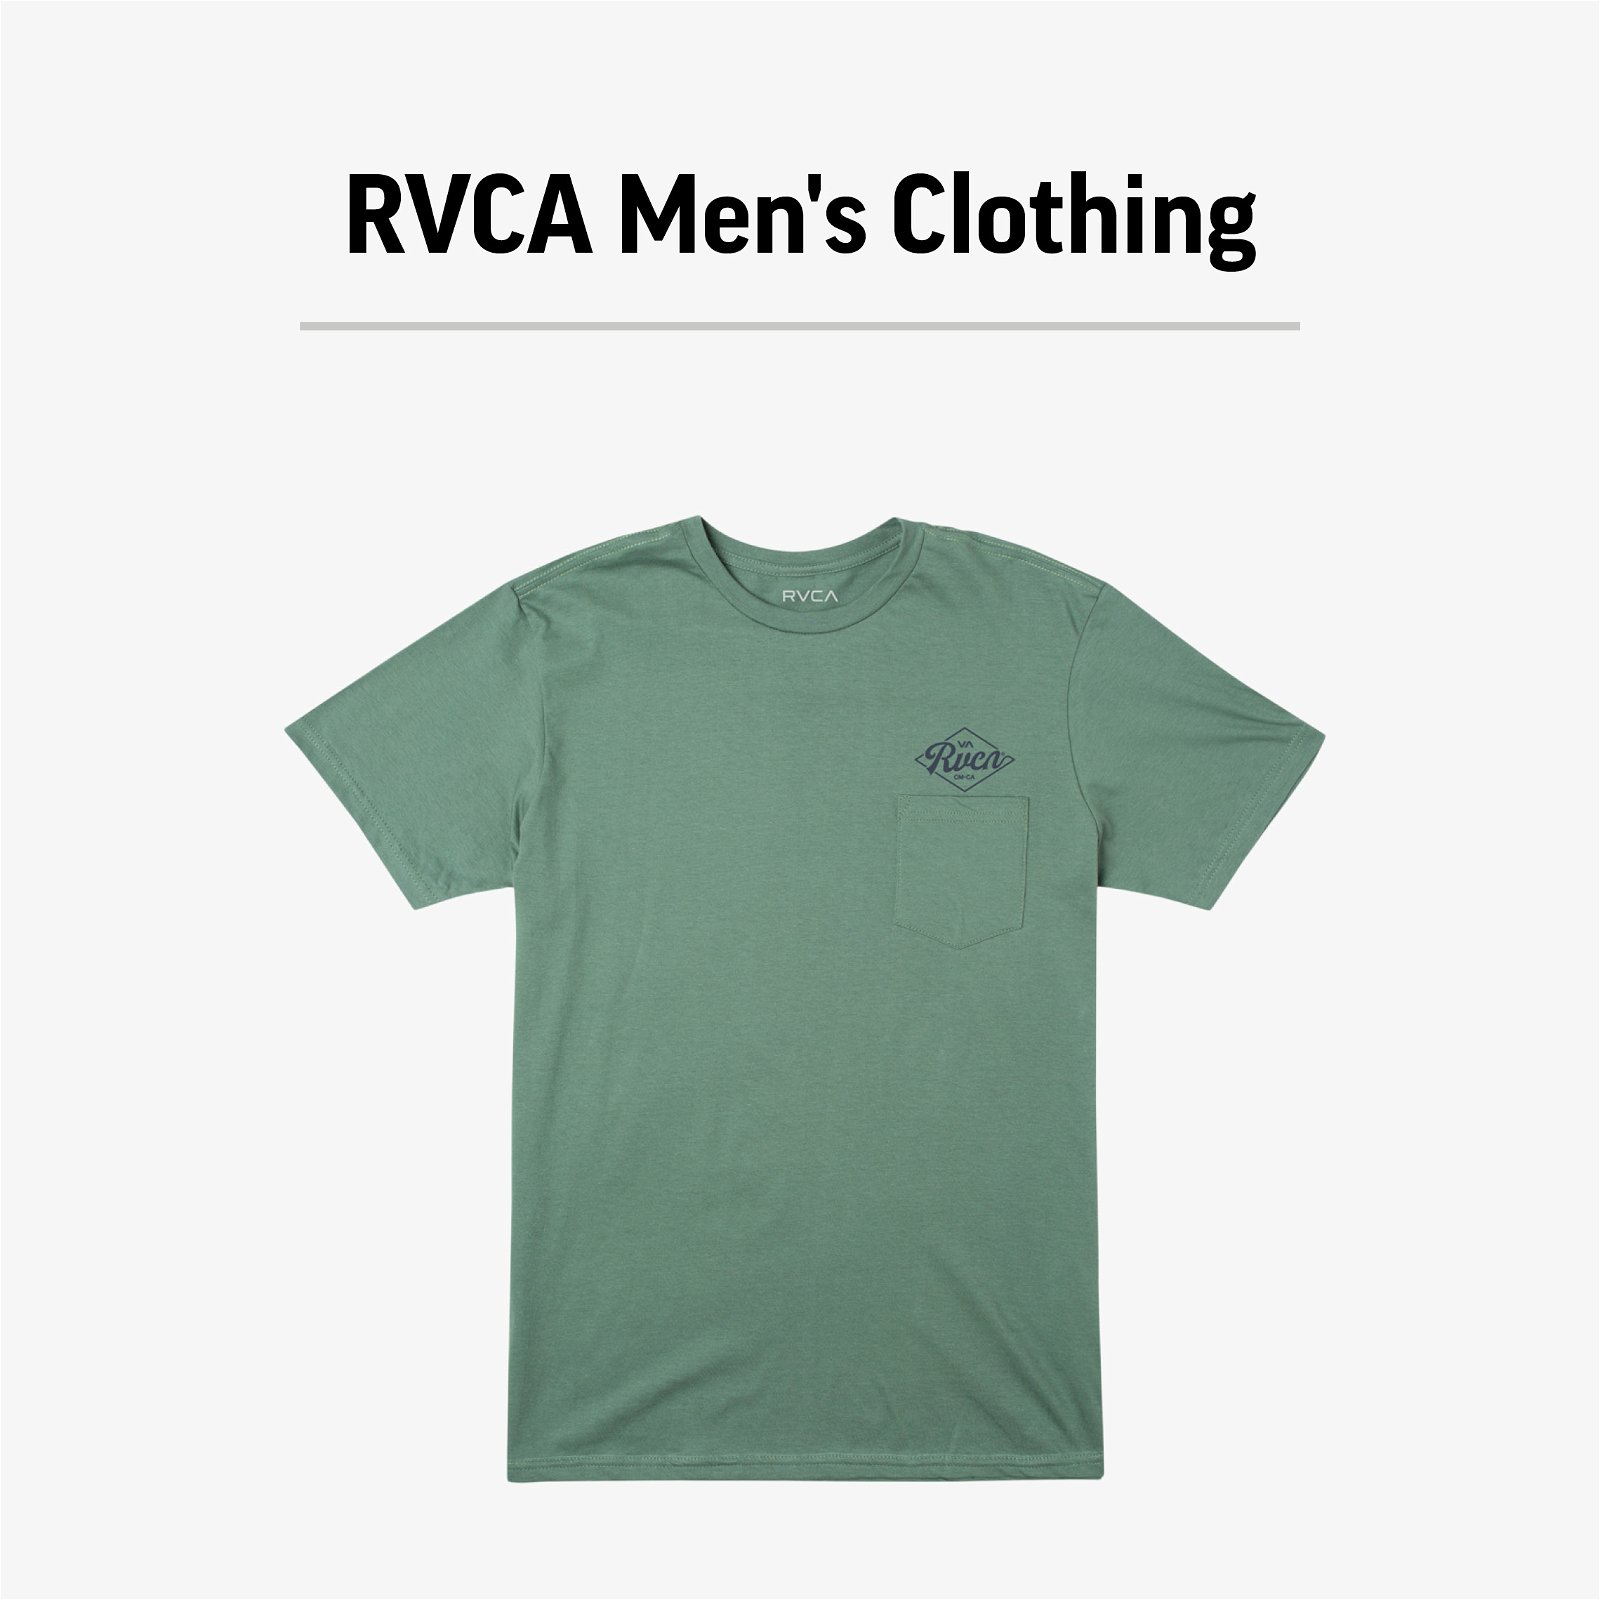 RVCA MEN'S CLOTHING